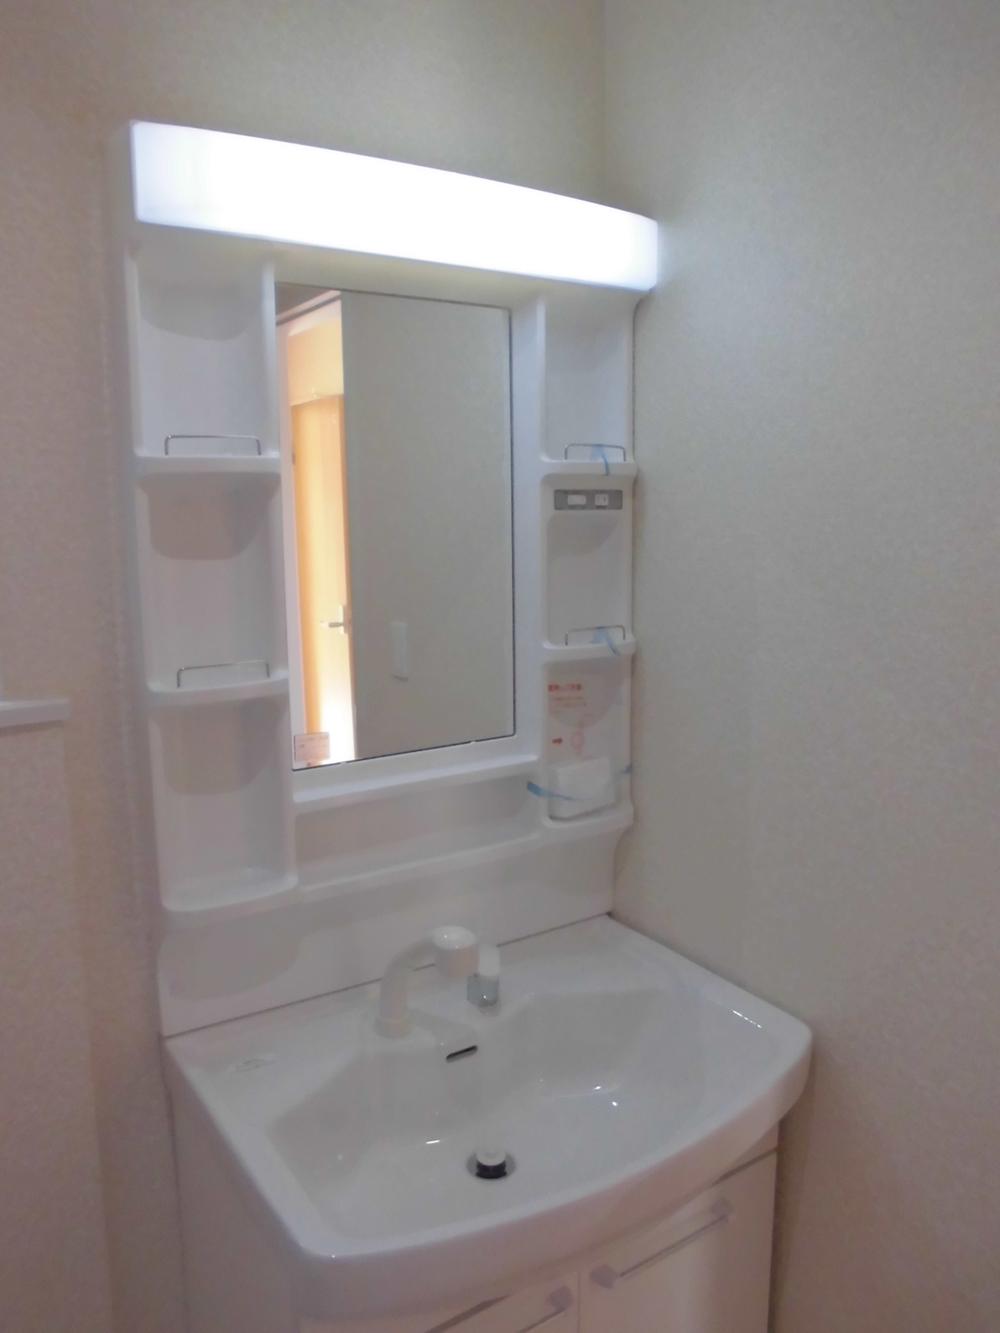 Wash basin, toilet. Interior (December 2, 2013) Shooting